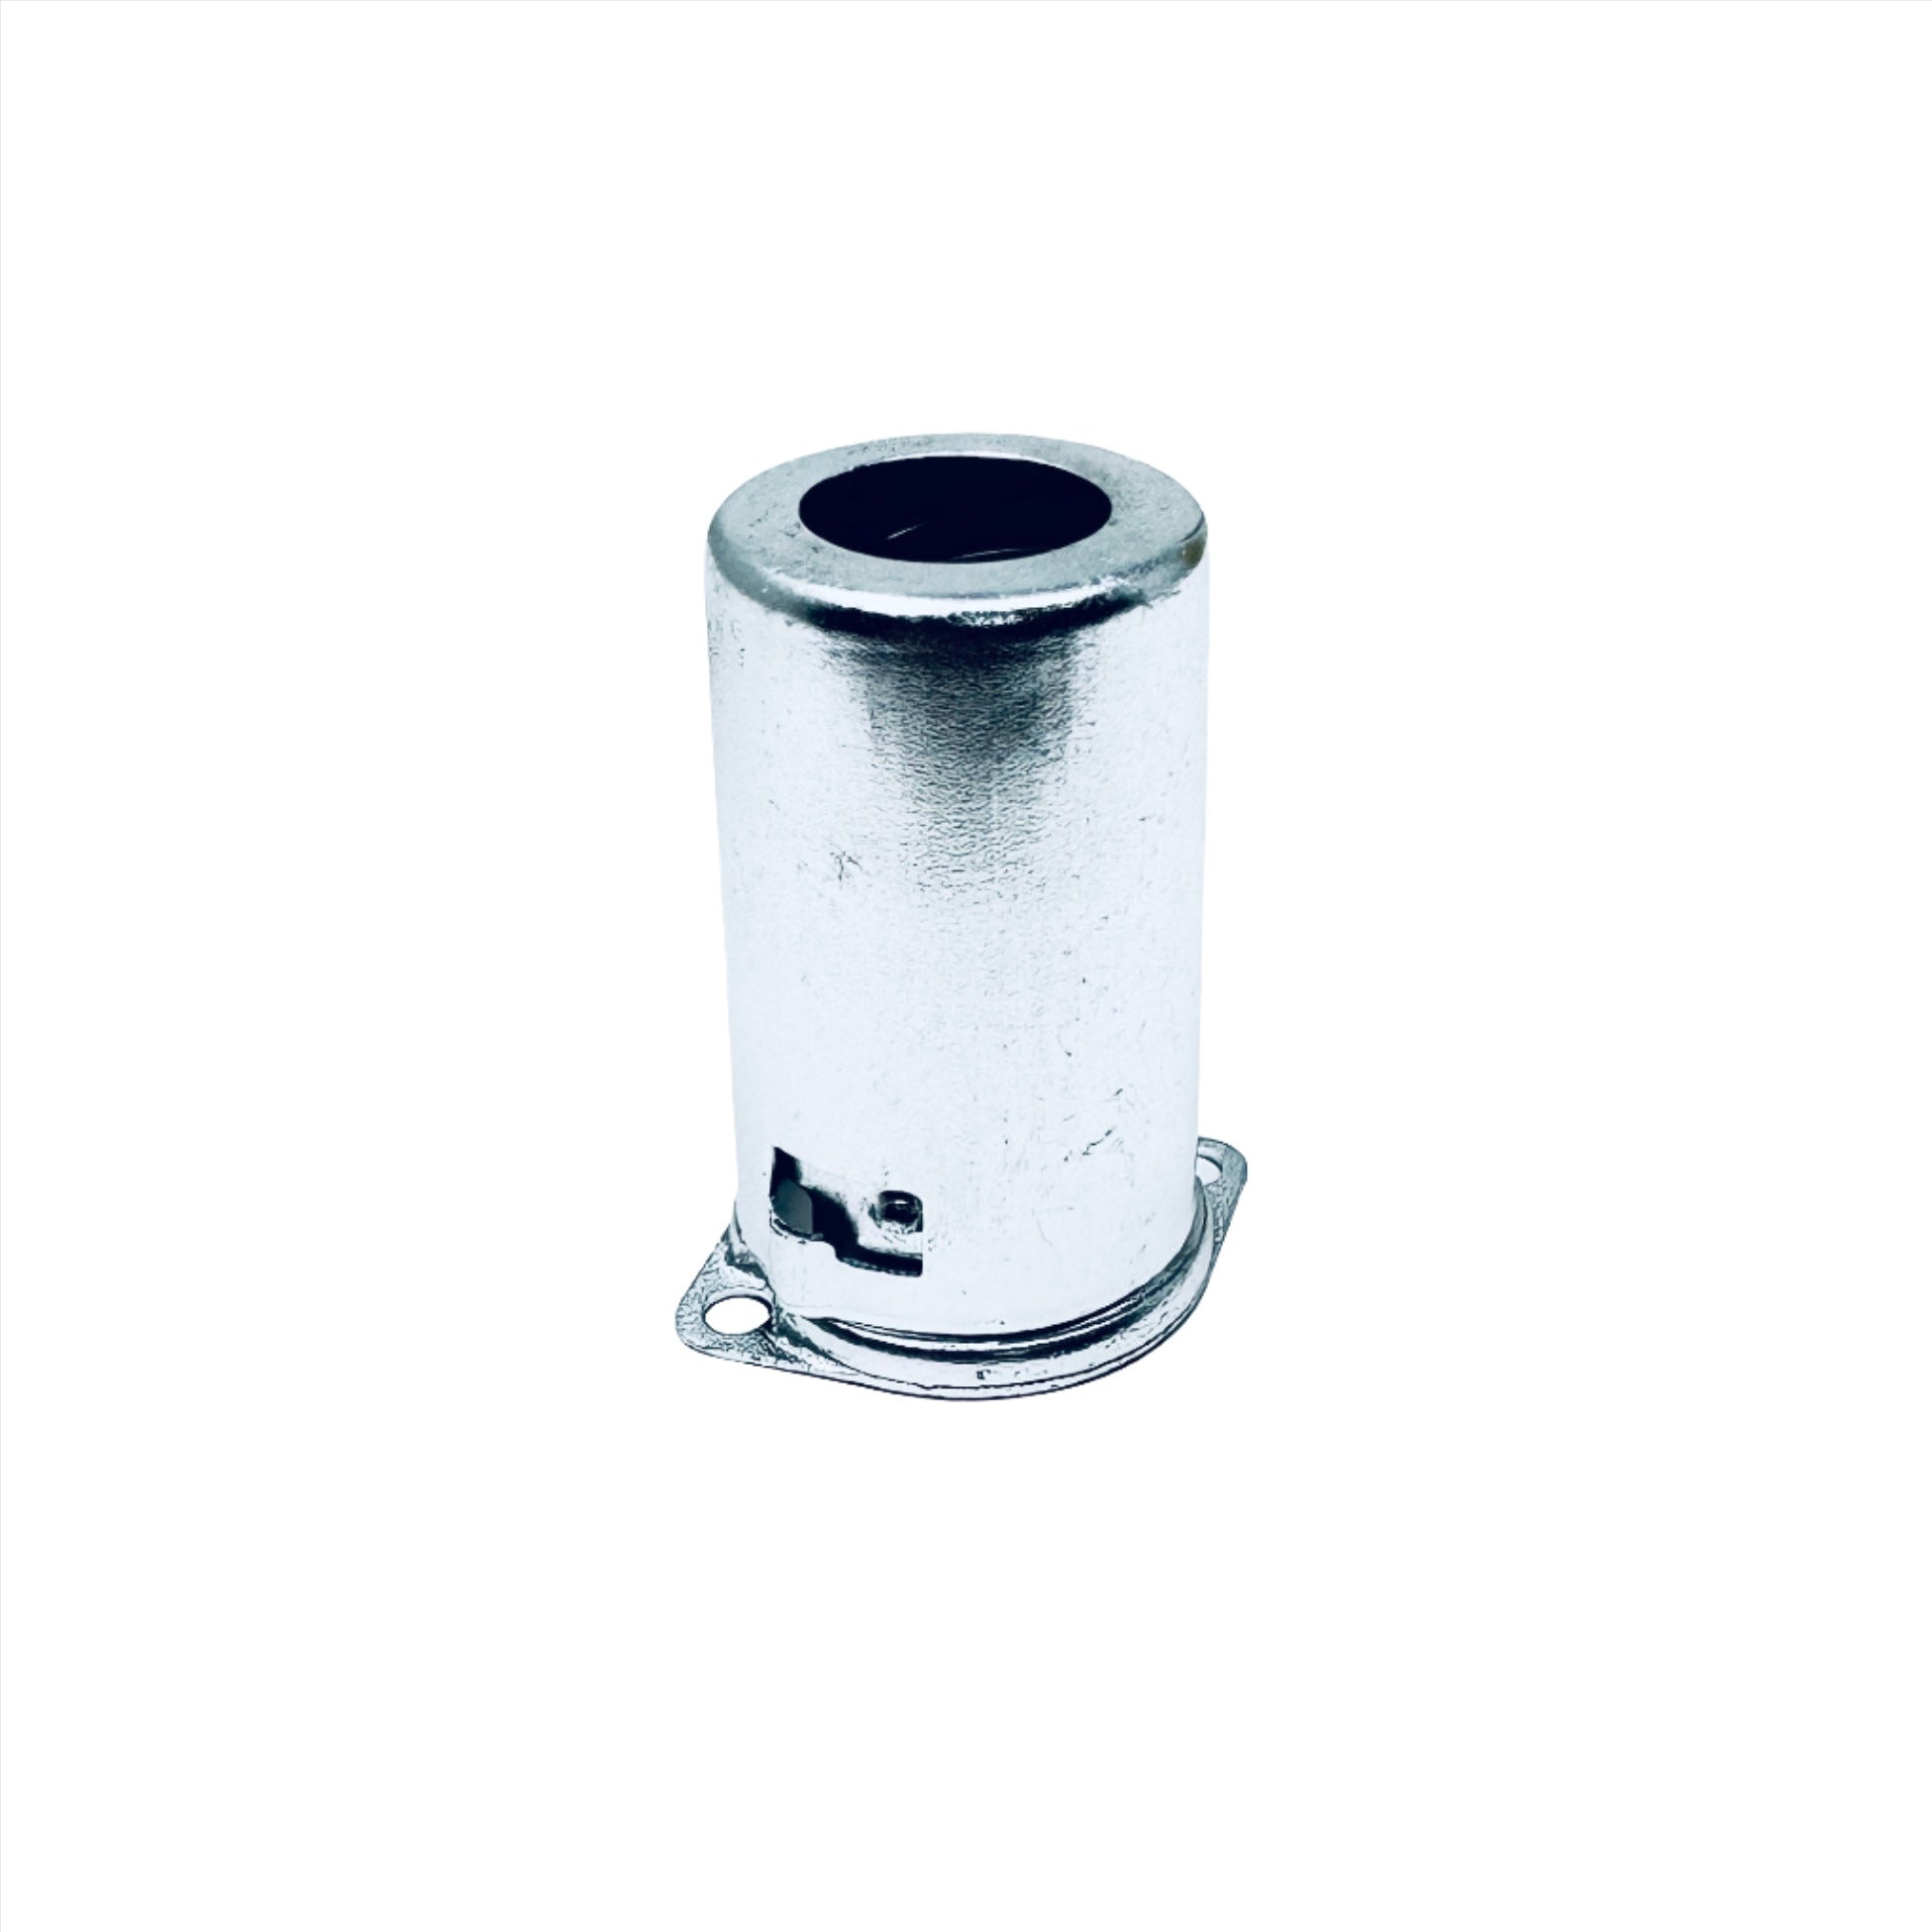 Aluminum Tube Shield - 44mm Tall, ruby tube shield, preamp tube shield, aluminum twist lock